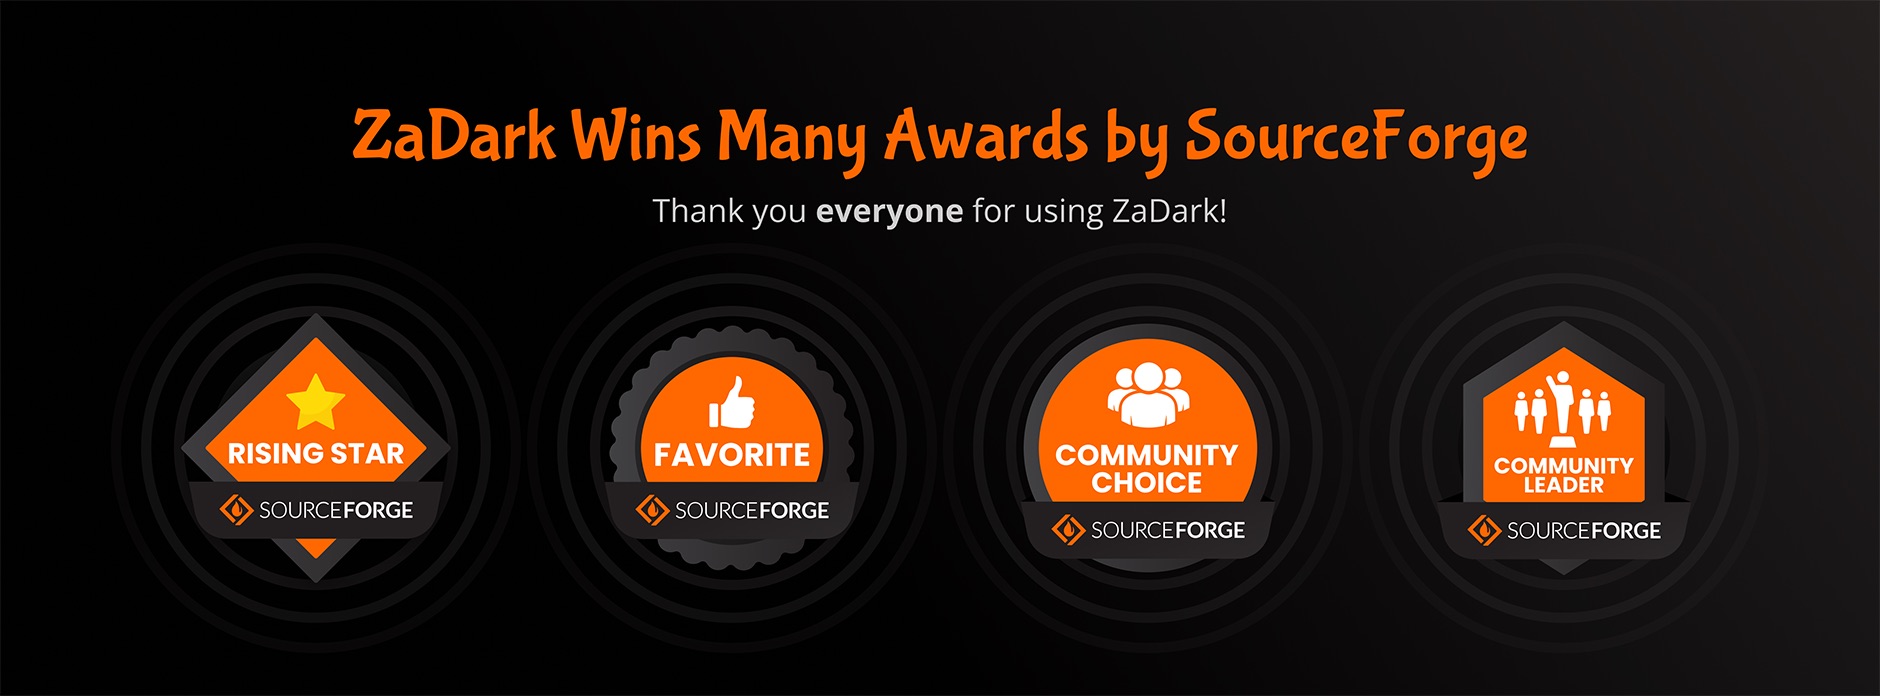 sourceforge-awards